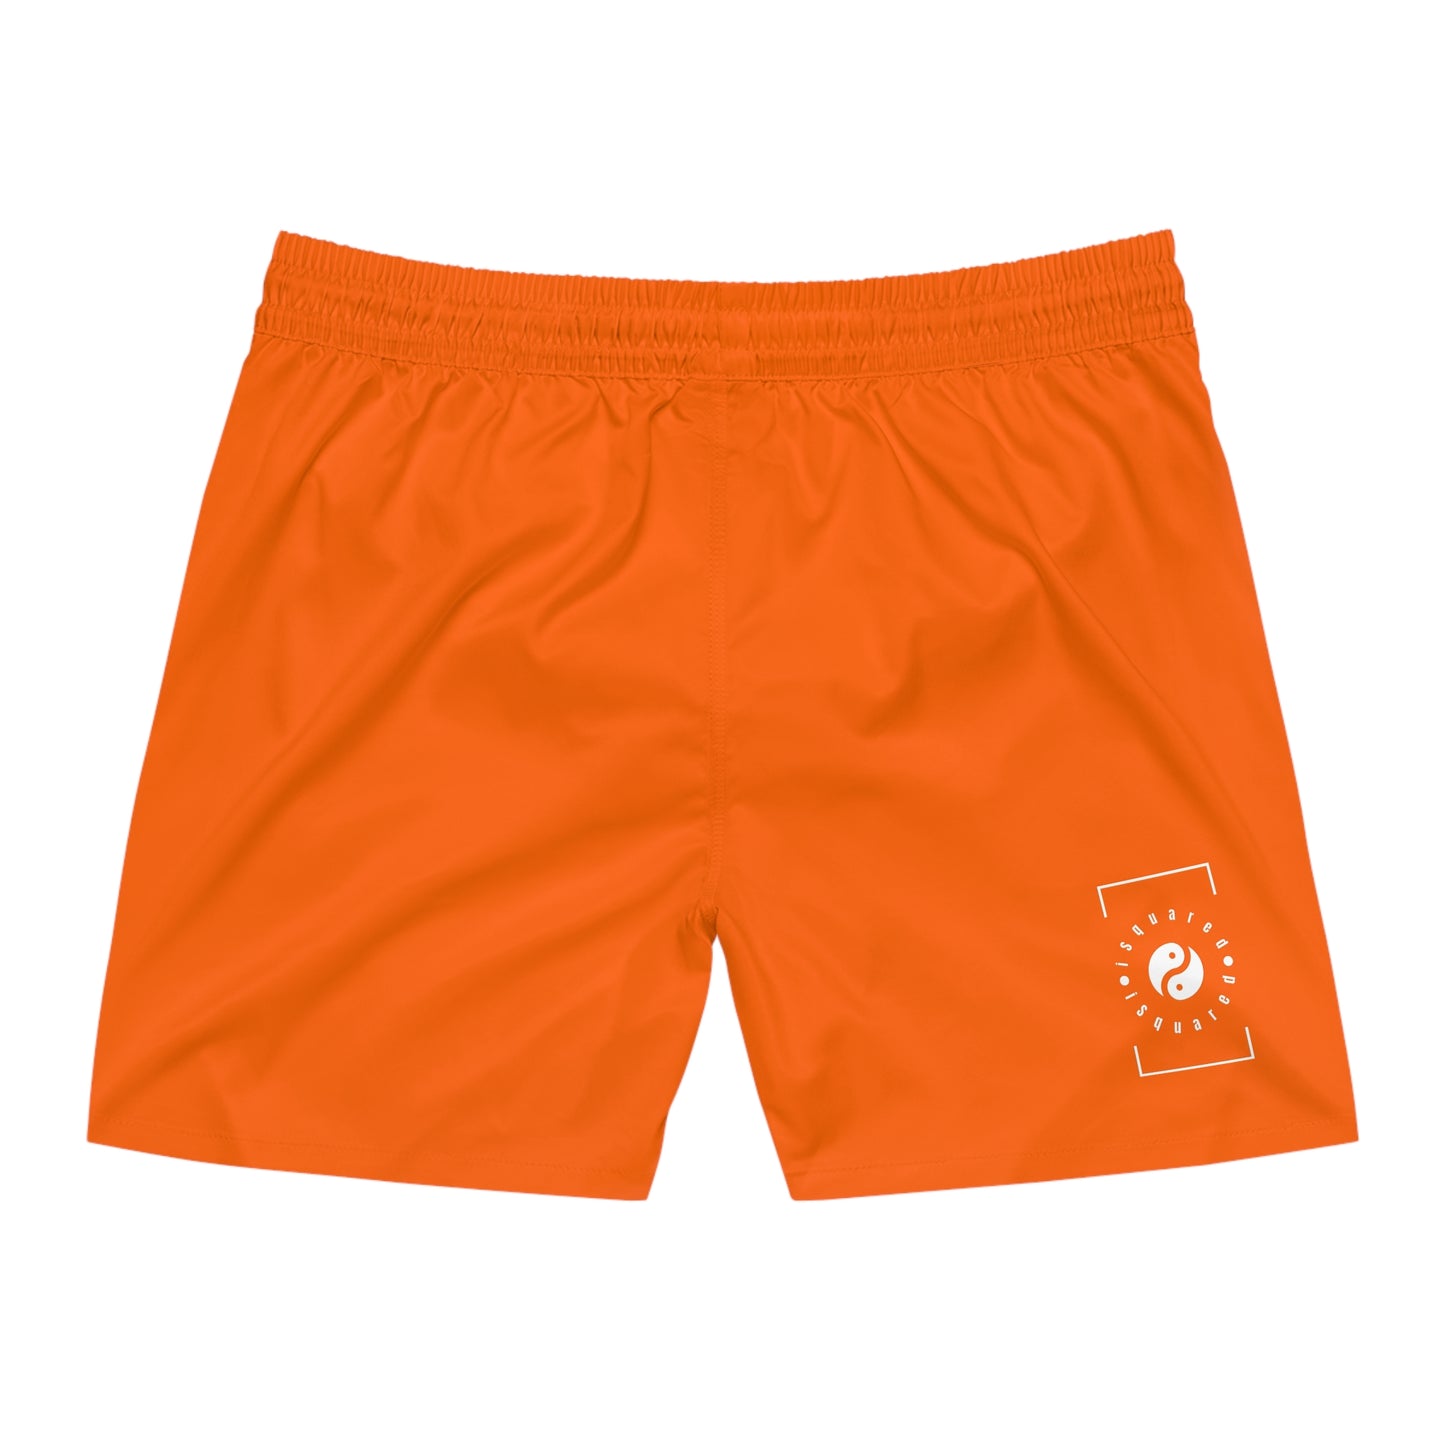 Neon Orange #FF6700 - Swim Shorts (Solid Color) for Men